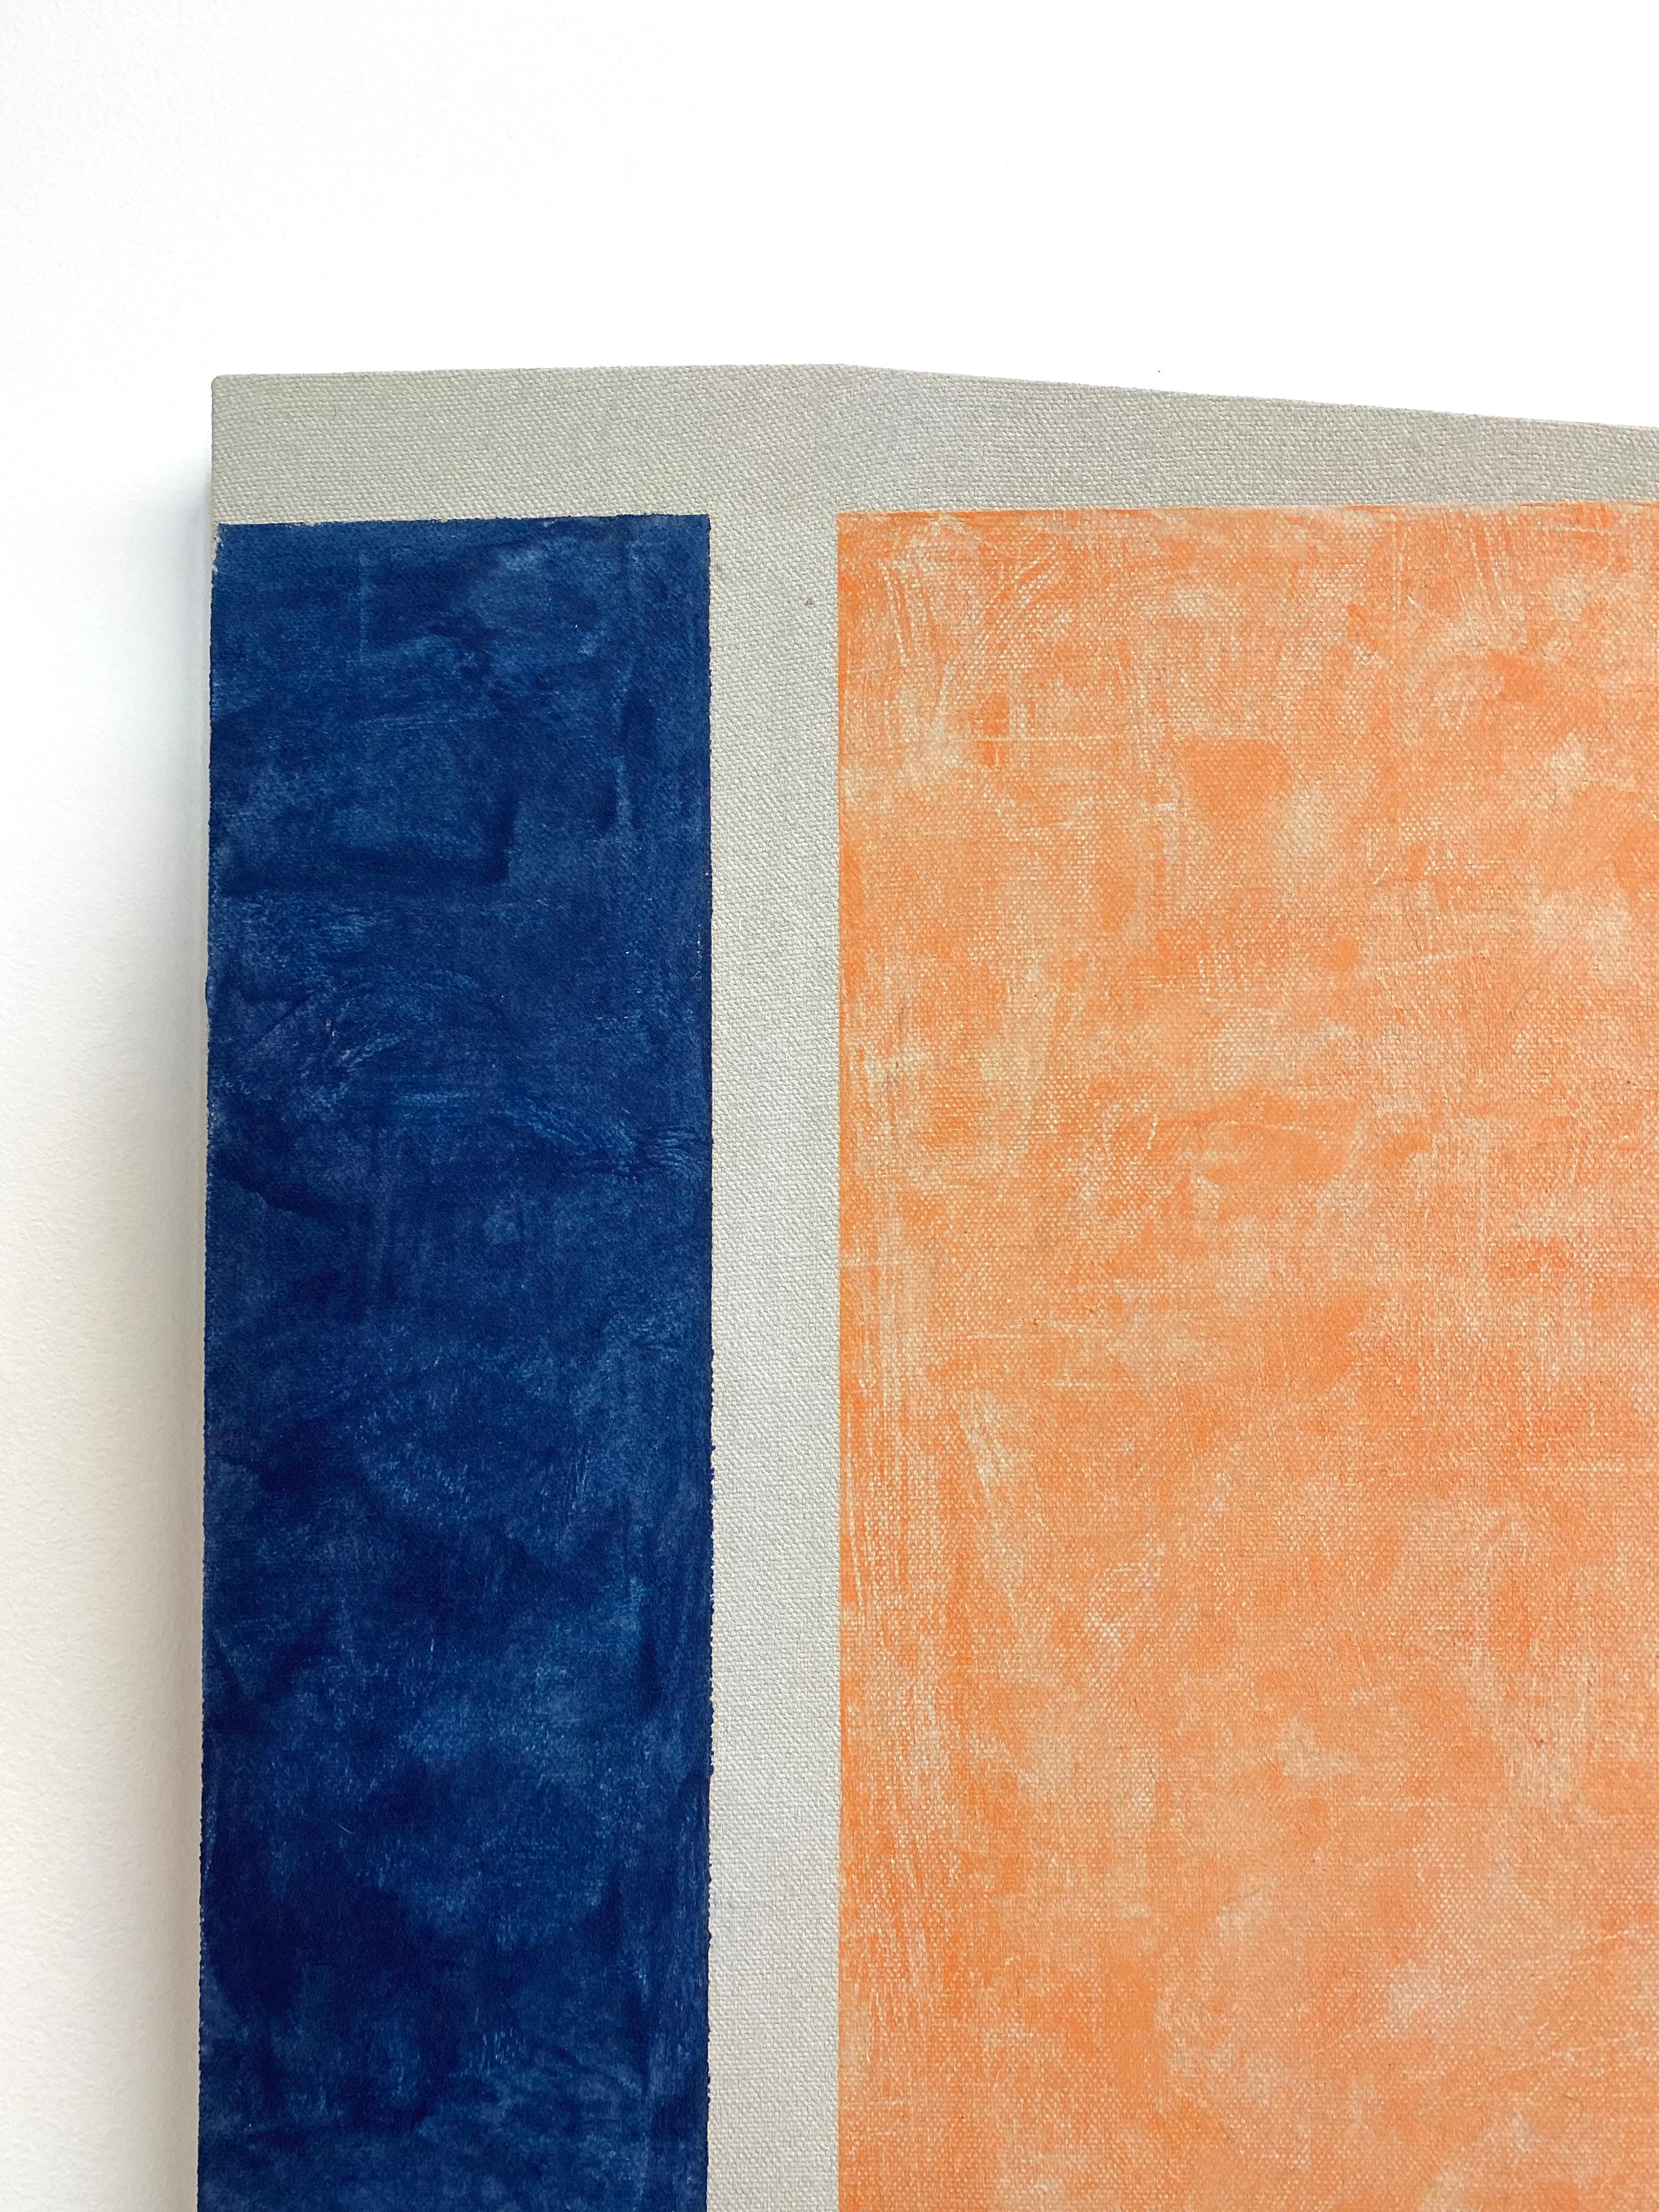 F30, Apricot Orange, Dark Lapis Blue, Geometric Abstract Shaped Panel Painting 3